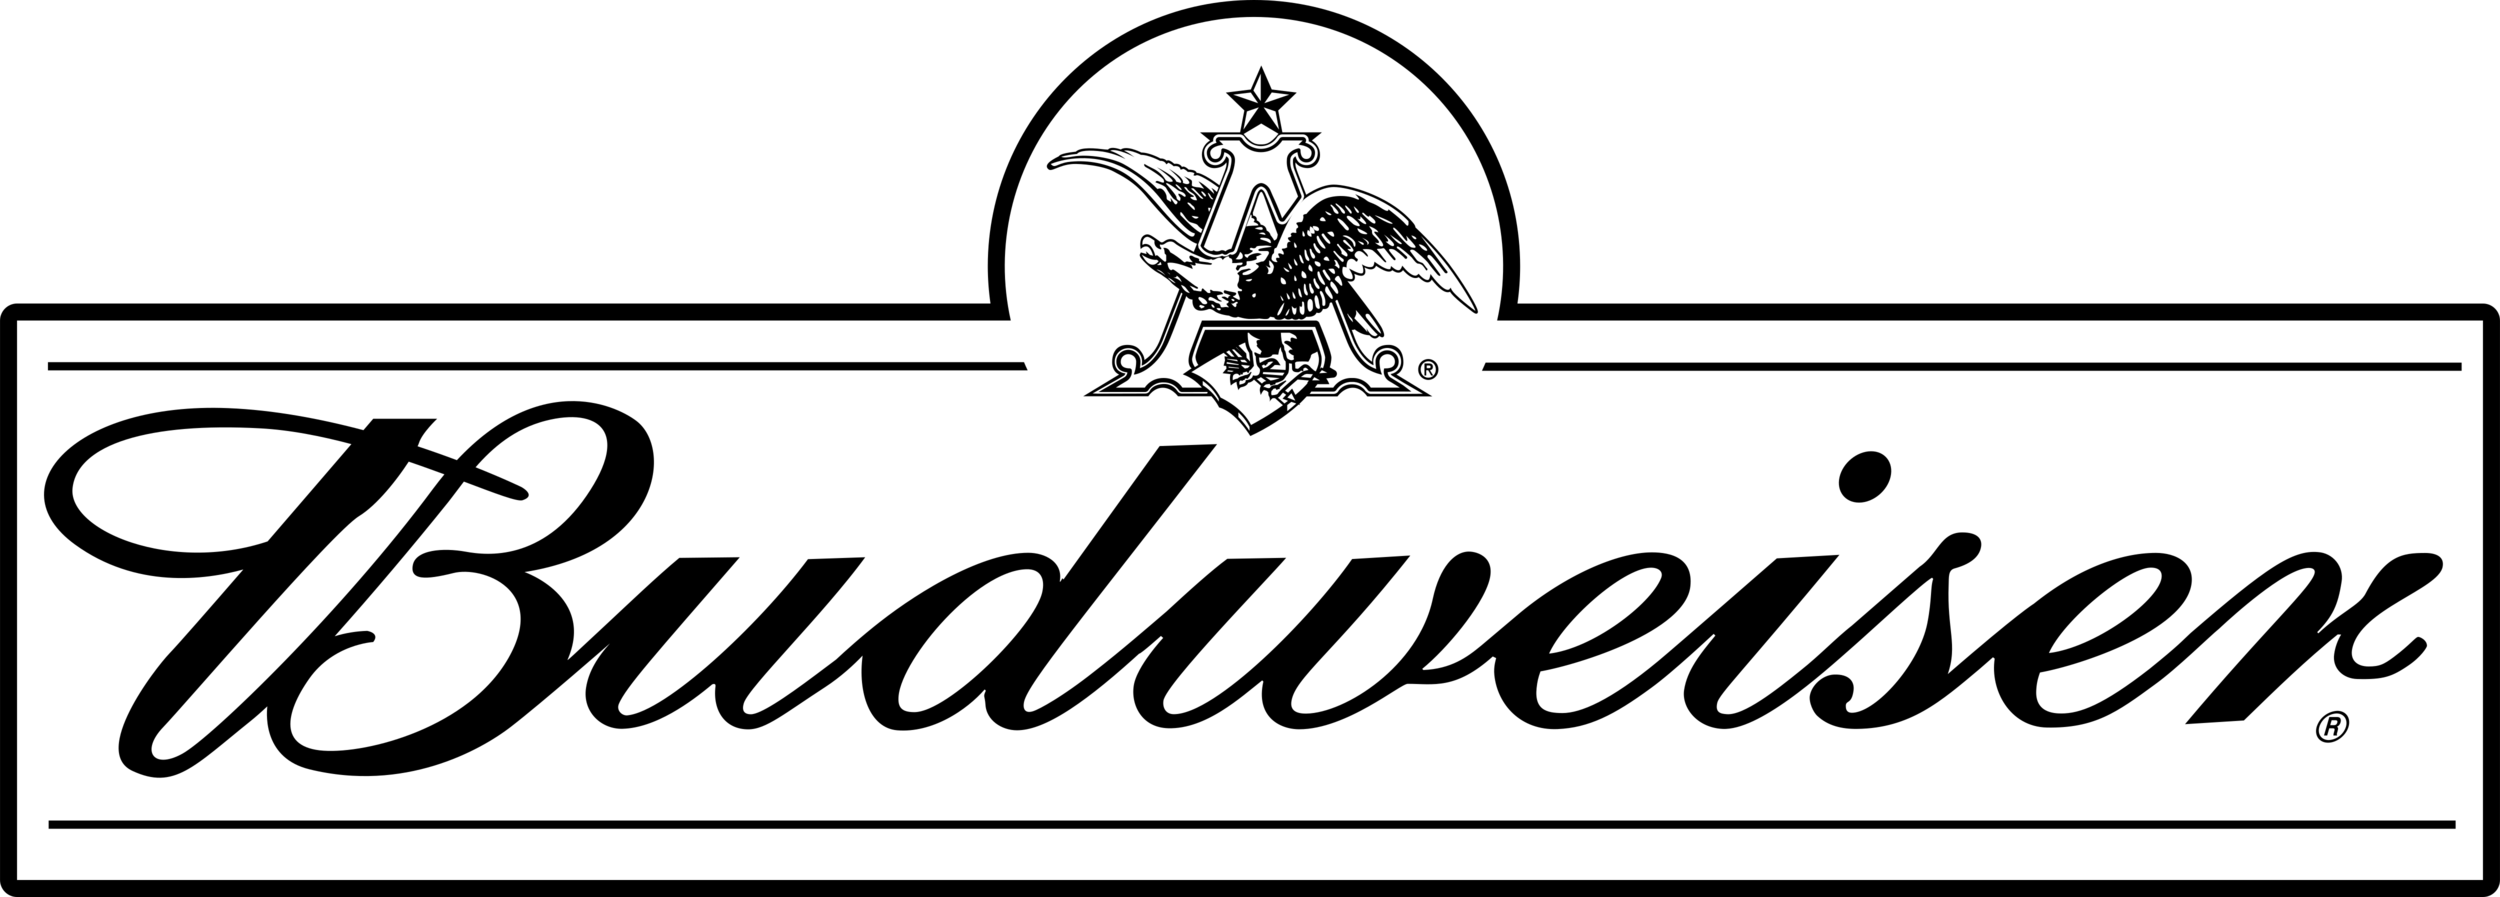 Budweiser_logo.png